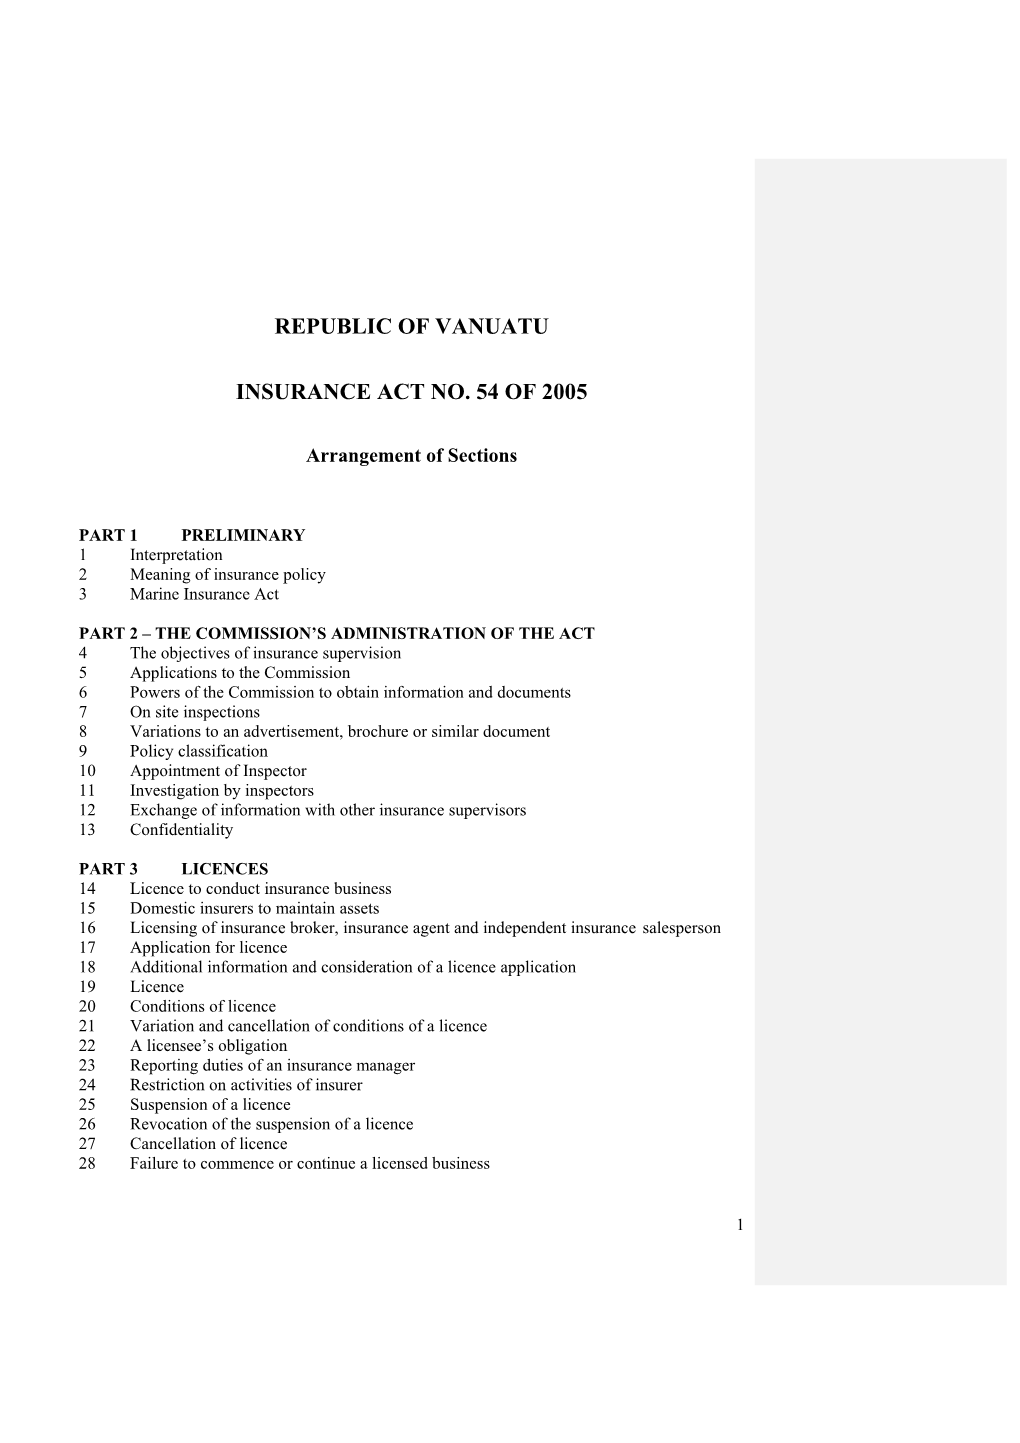 Republic of Vanuatu Insurance Act No. 54 of 2005